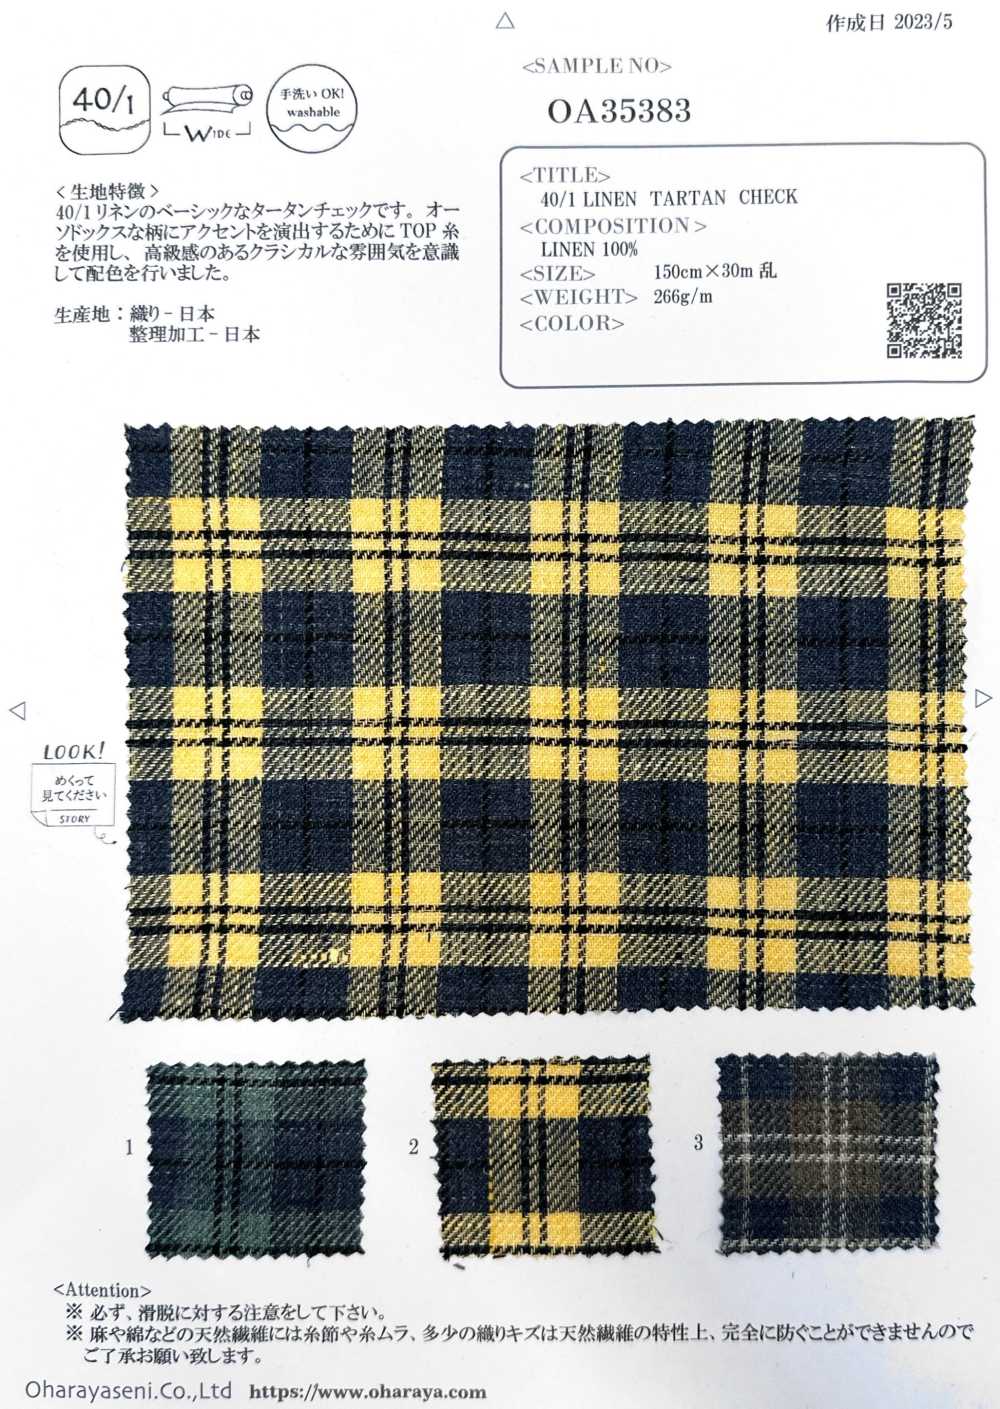 OA35383 40/1 LEINEN-TARTAN-KARIER[Textilgewebe] Oharayaseni